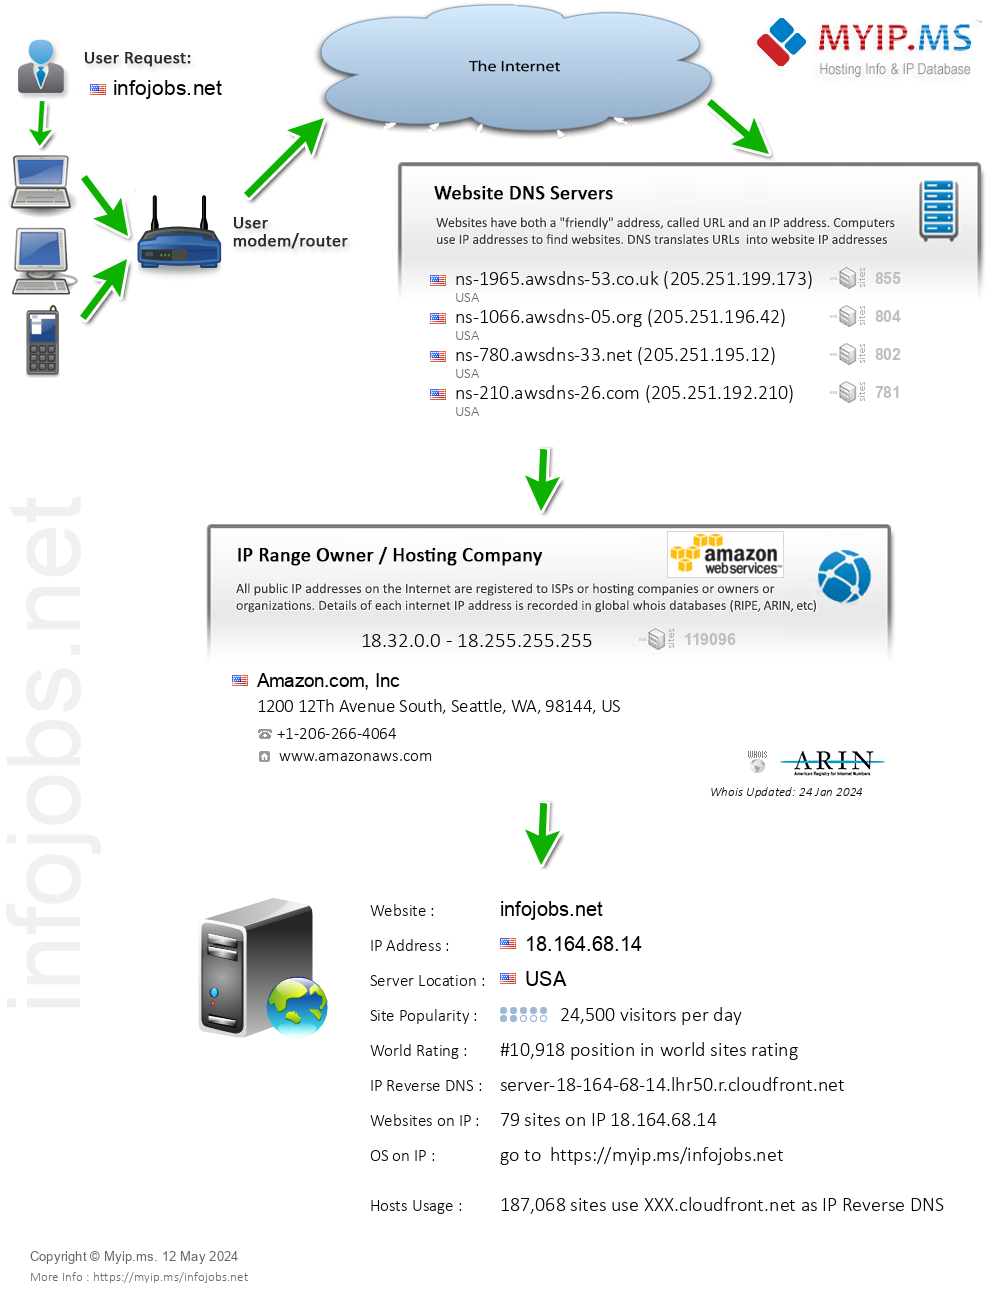 Infojobs.net - Website Hosting Visual IP Diagram